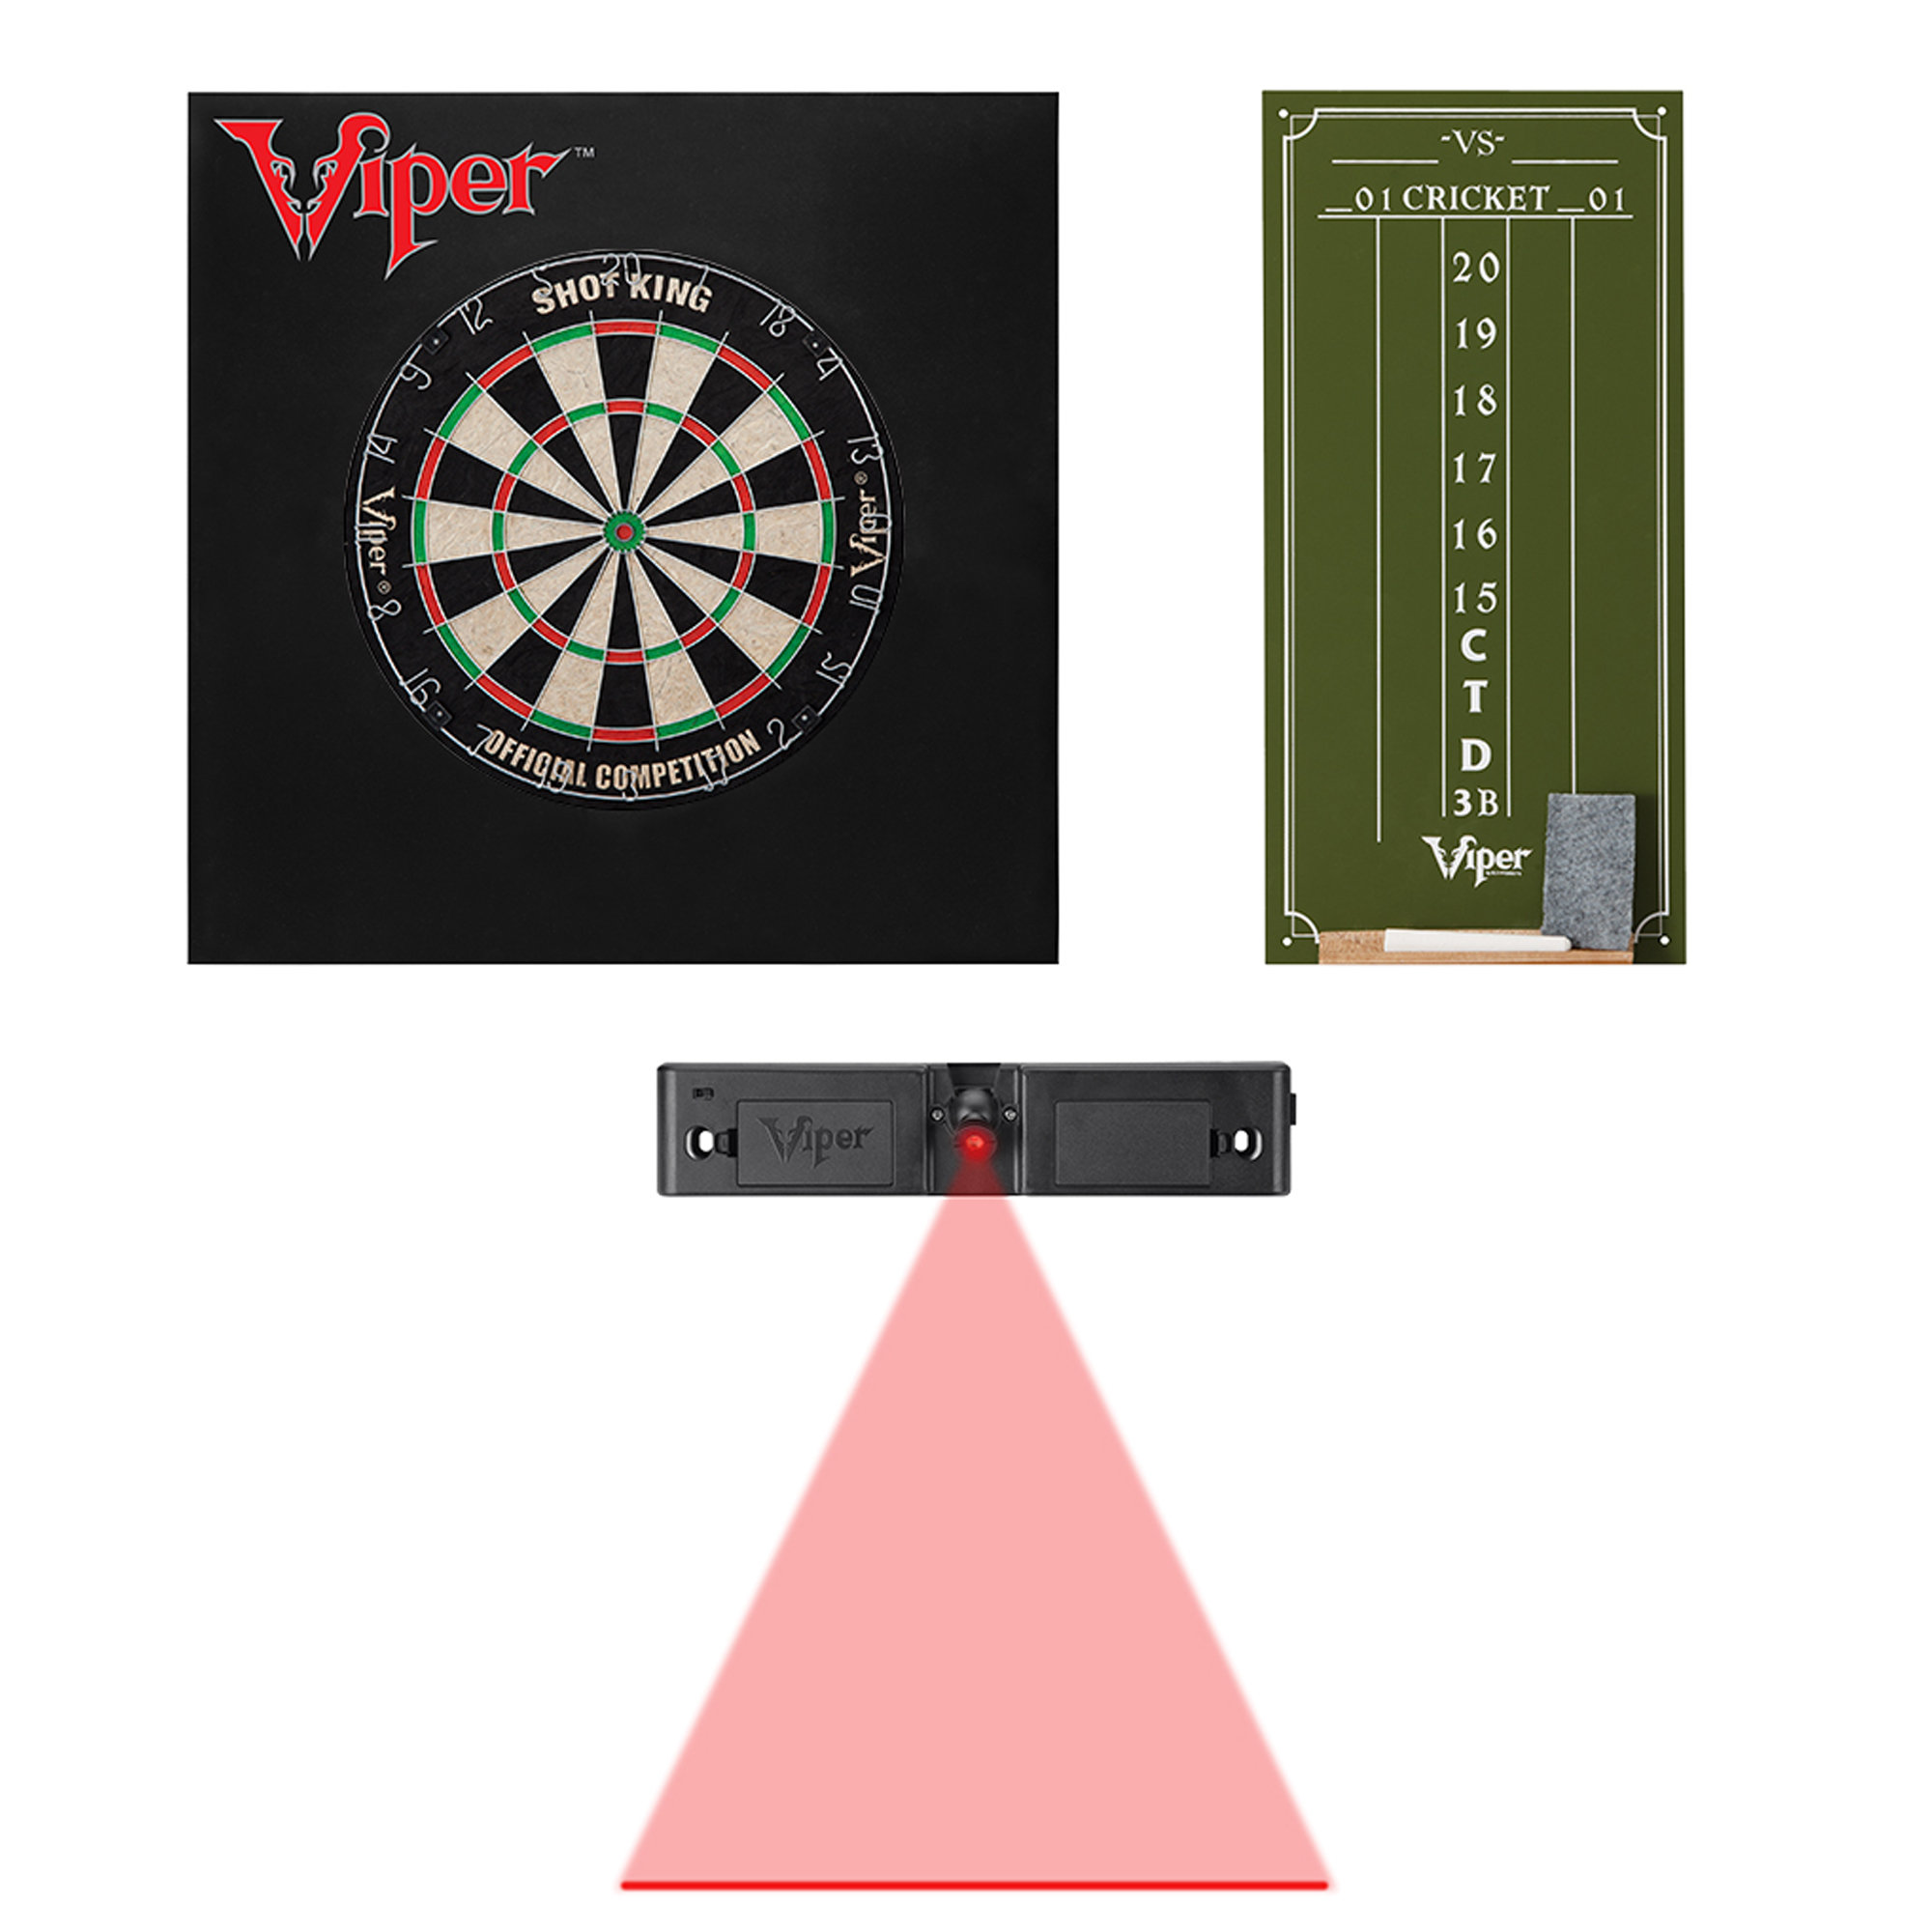 Viper Shot King Bristle Dartboard, Viper Small Cricket Chalk Scoreboard, Throw Line Light, And Viper Wall Defender II Wayfair